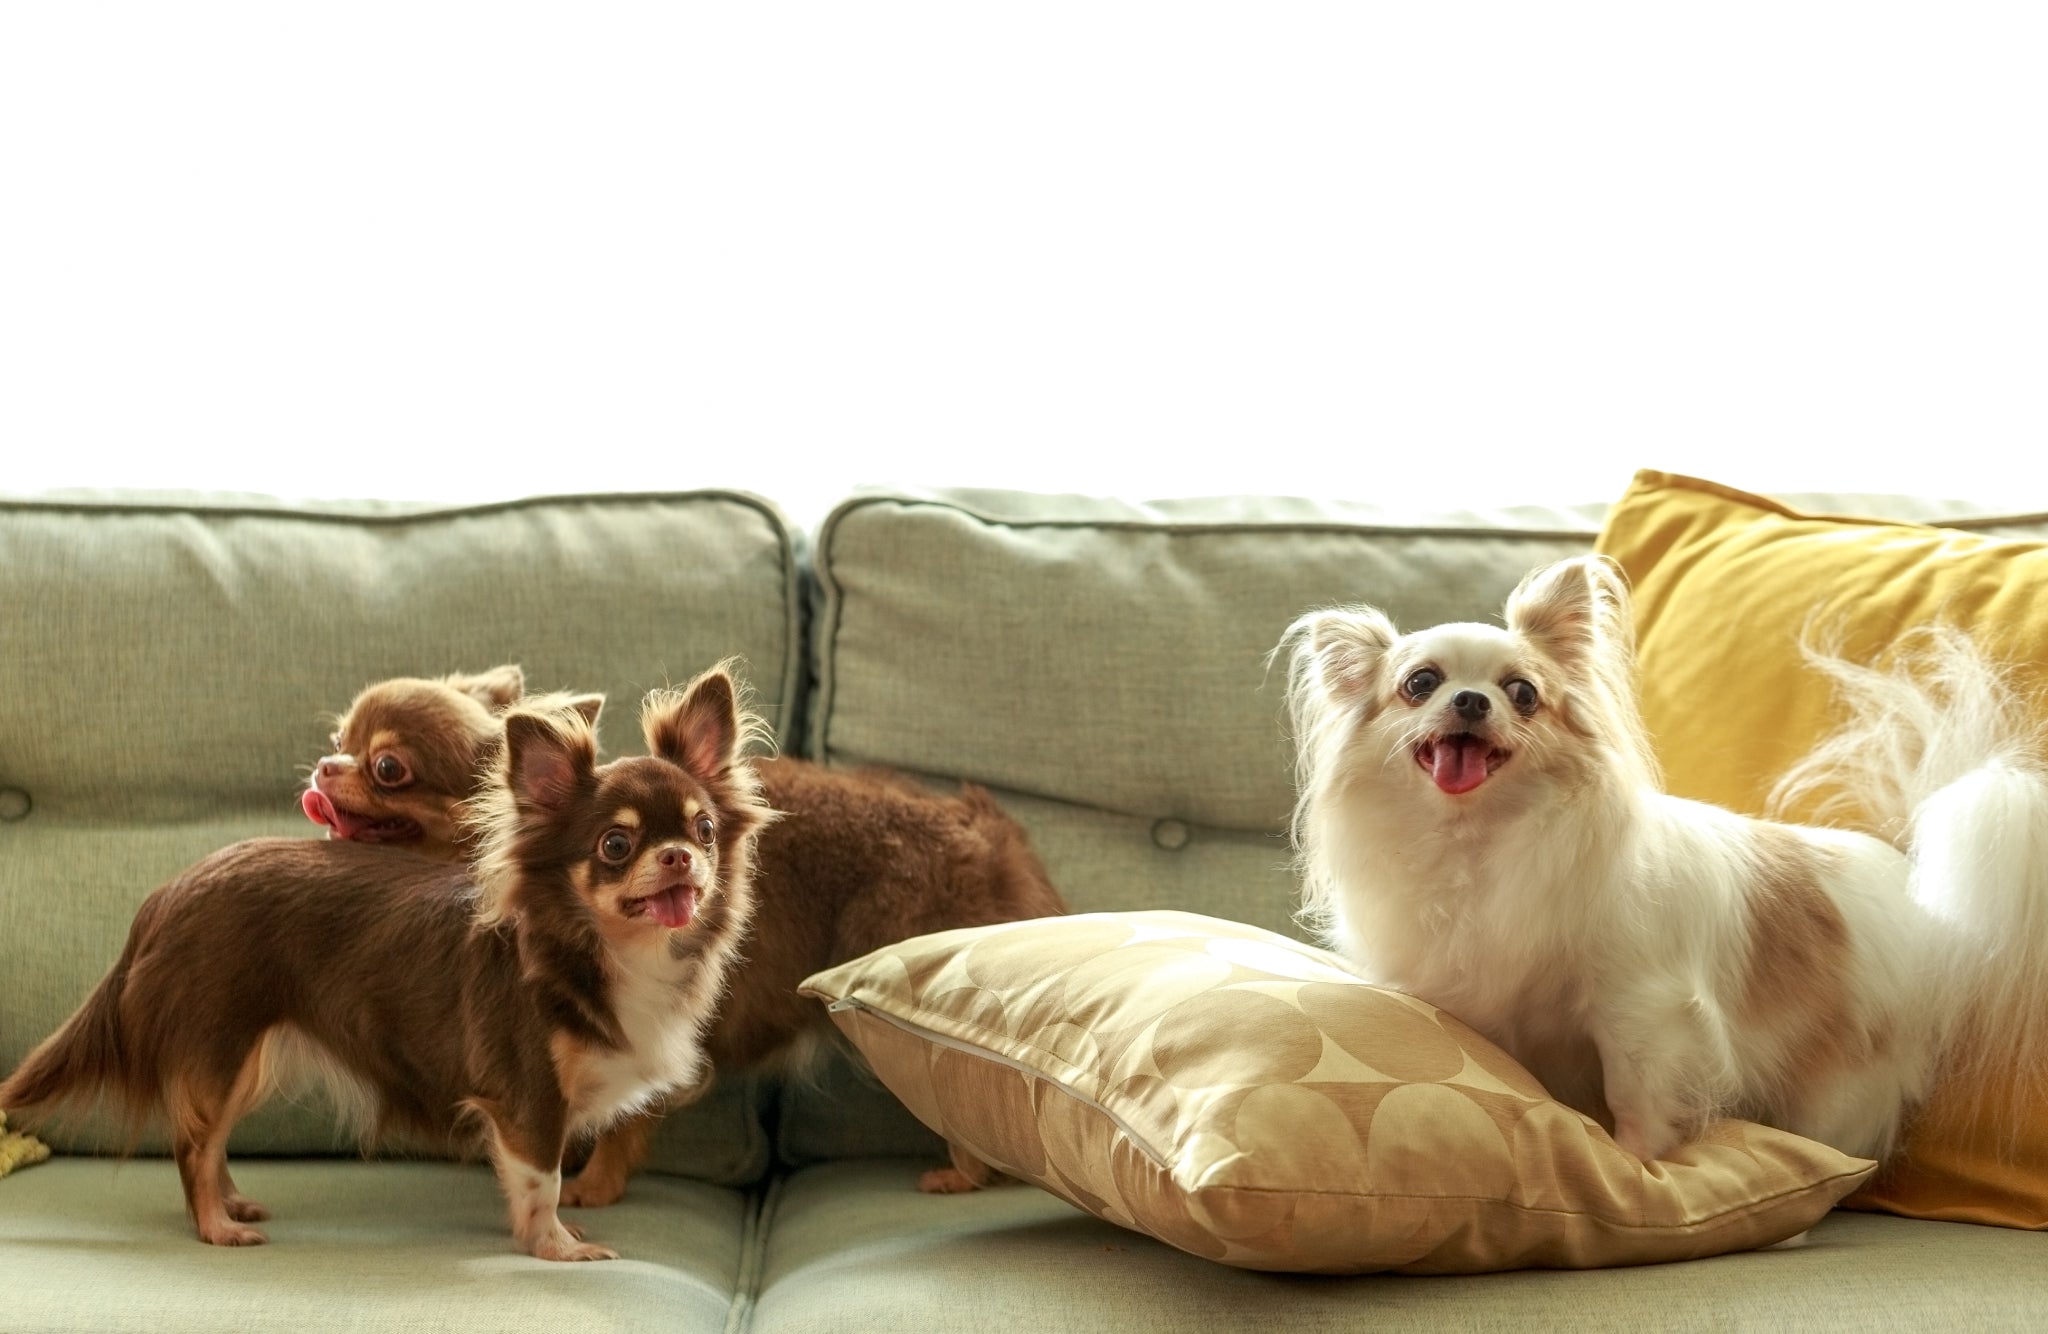 microfiber, the sofa materials that doggo love